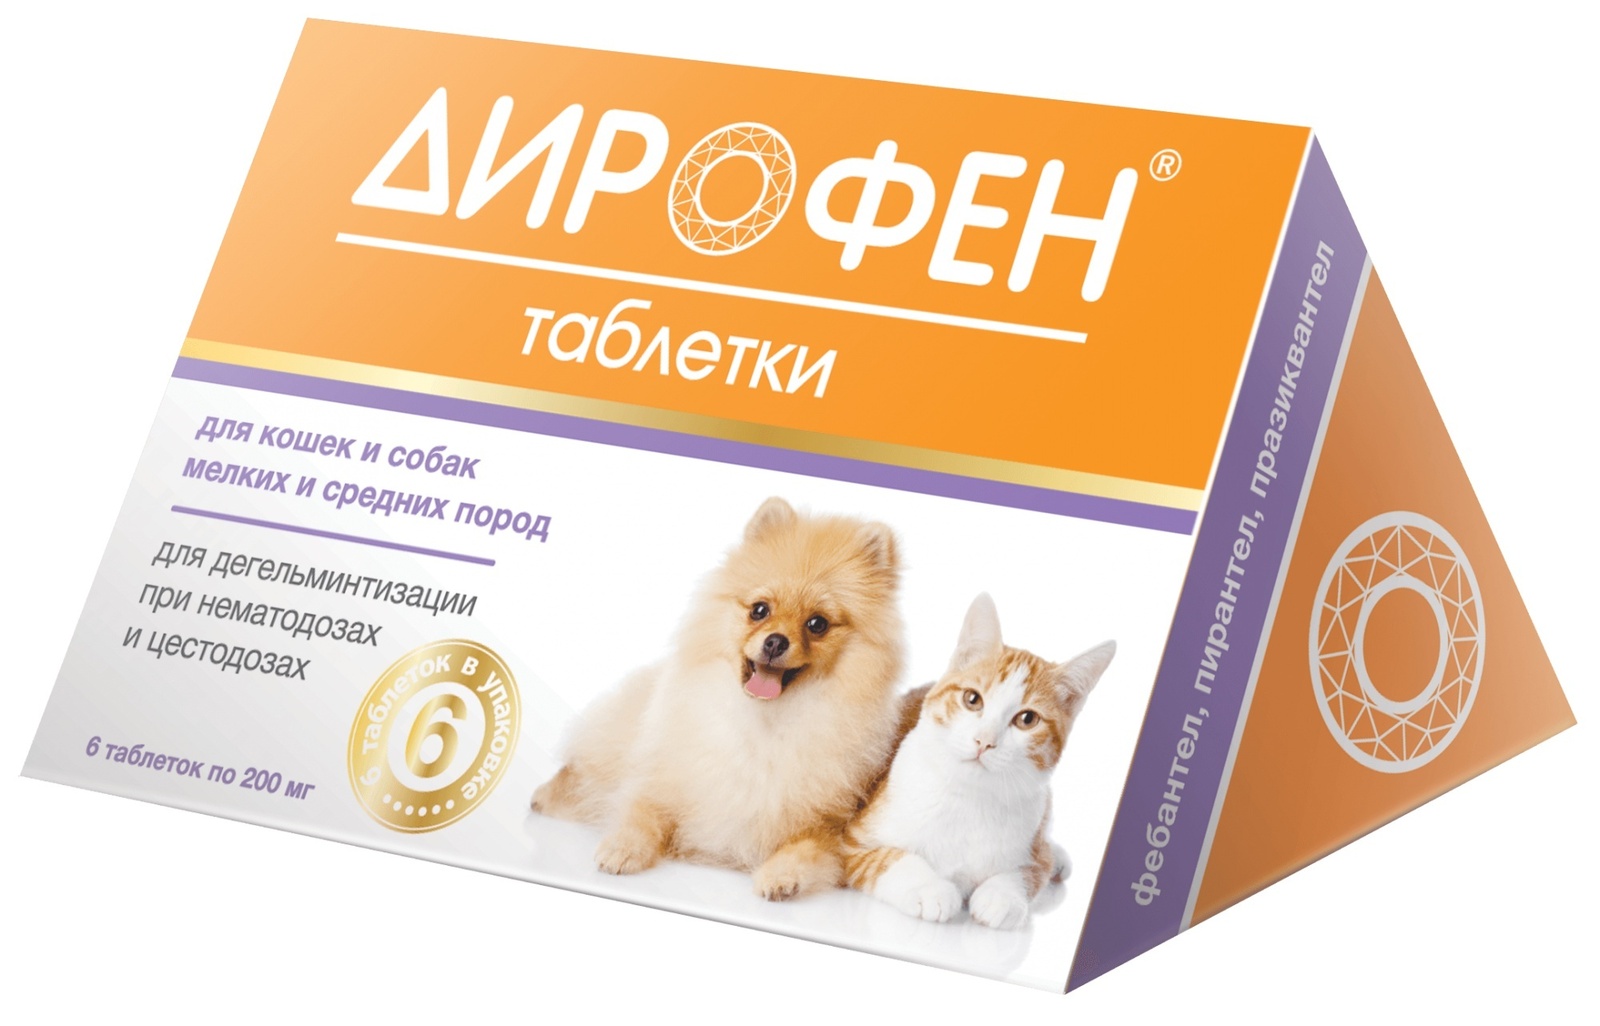 Apicenna Apicenna дирофен плюс таблетки от глистов для кошек и собак (11 г) 24736